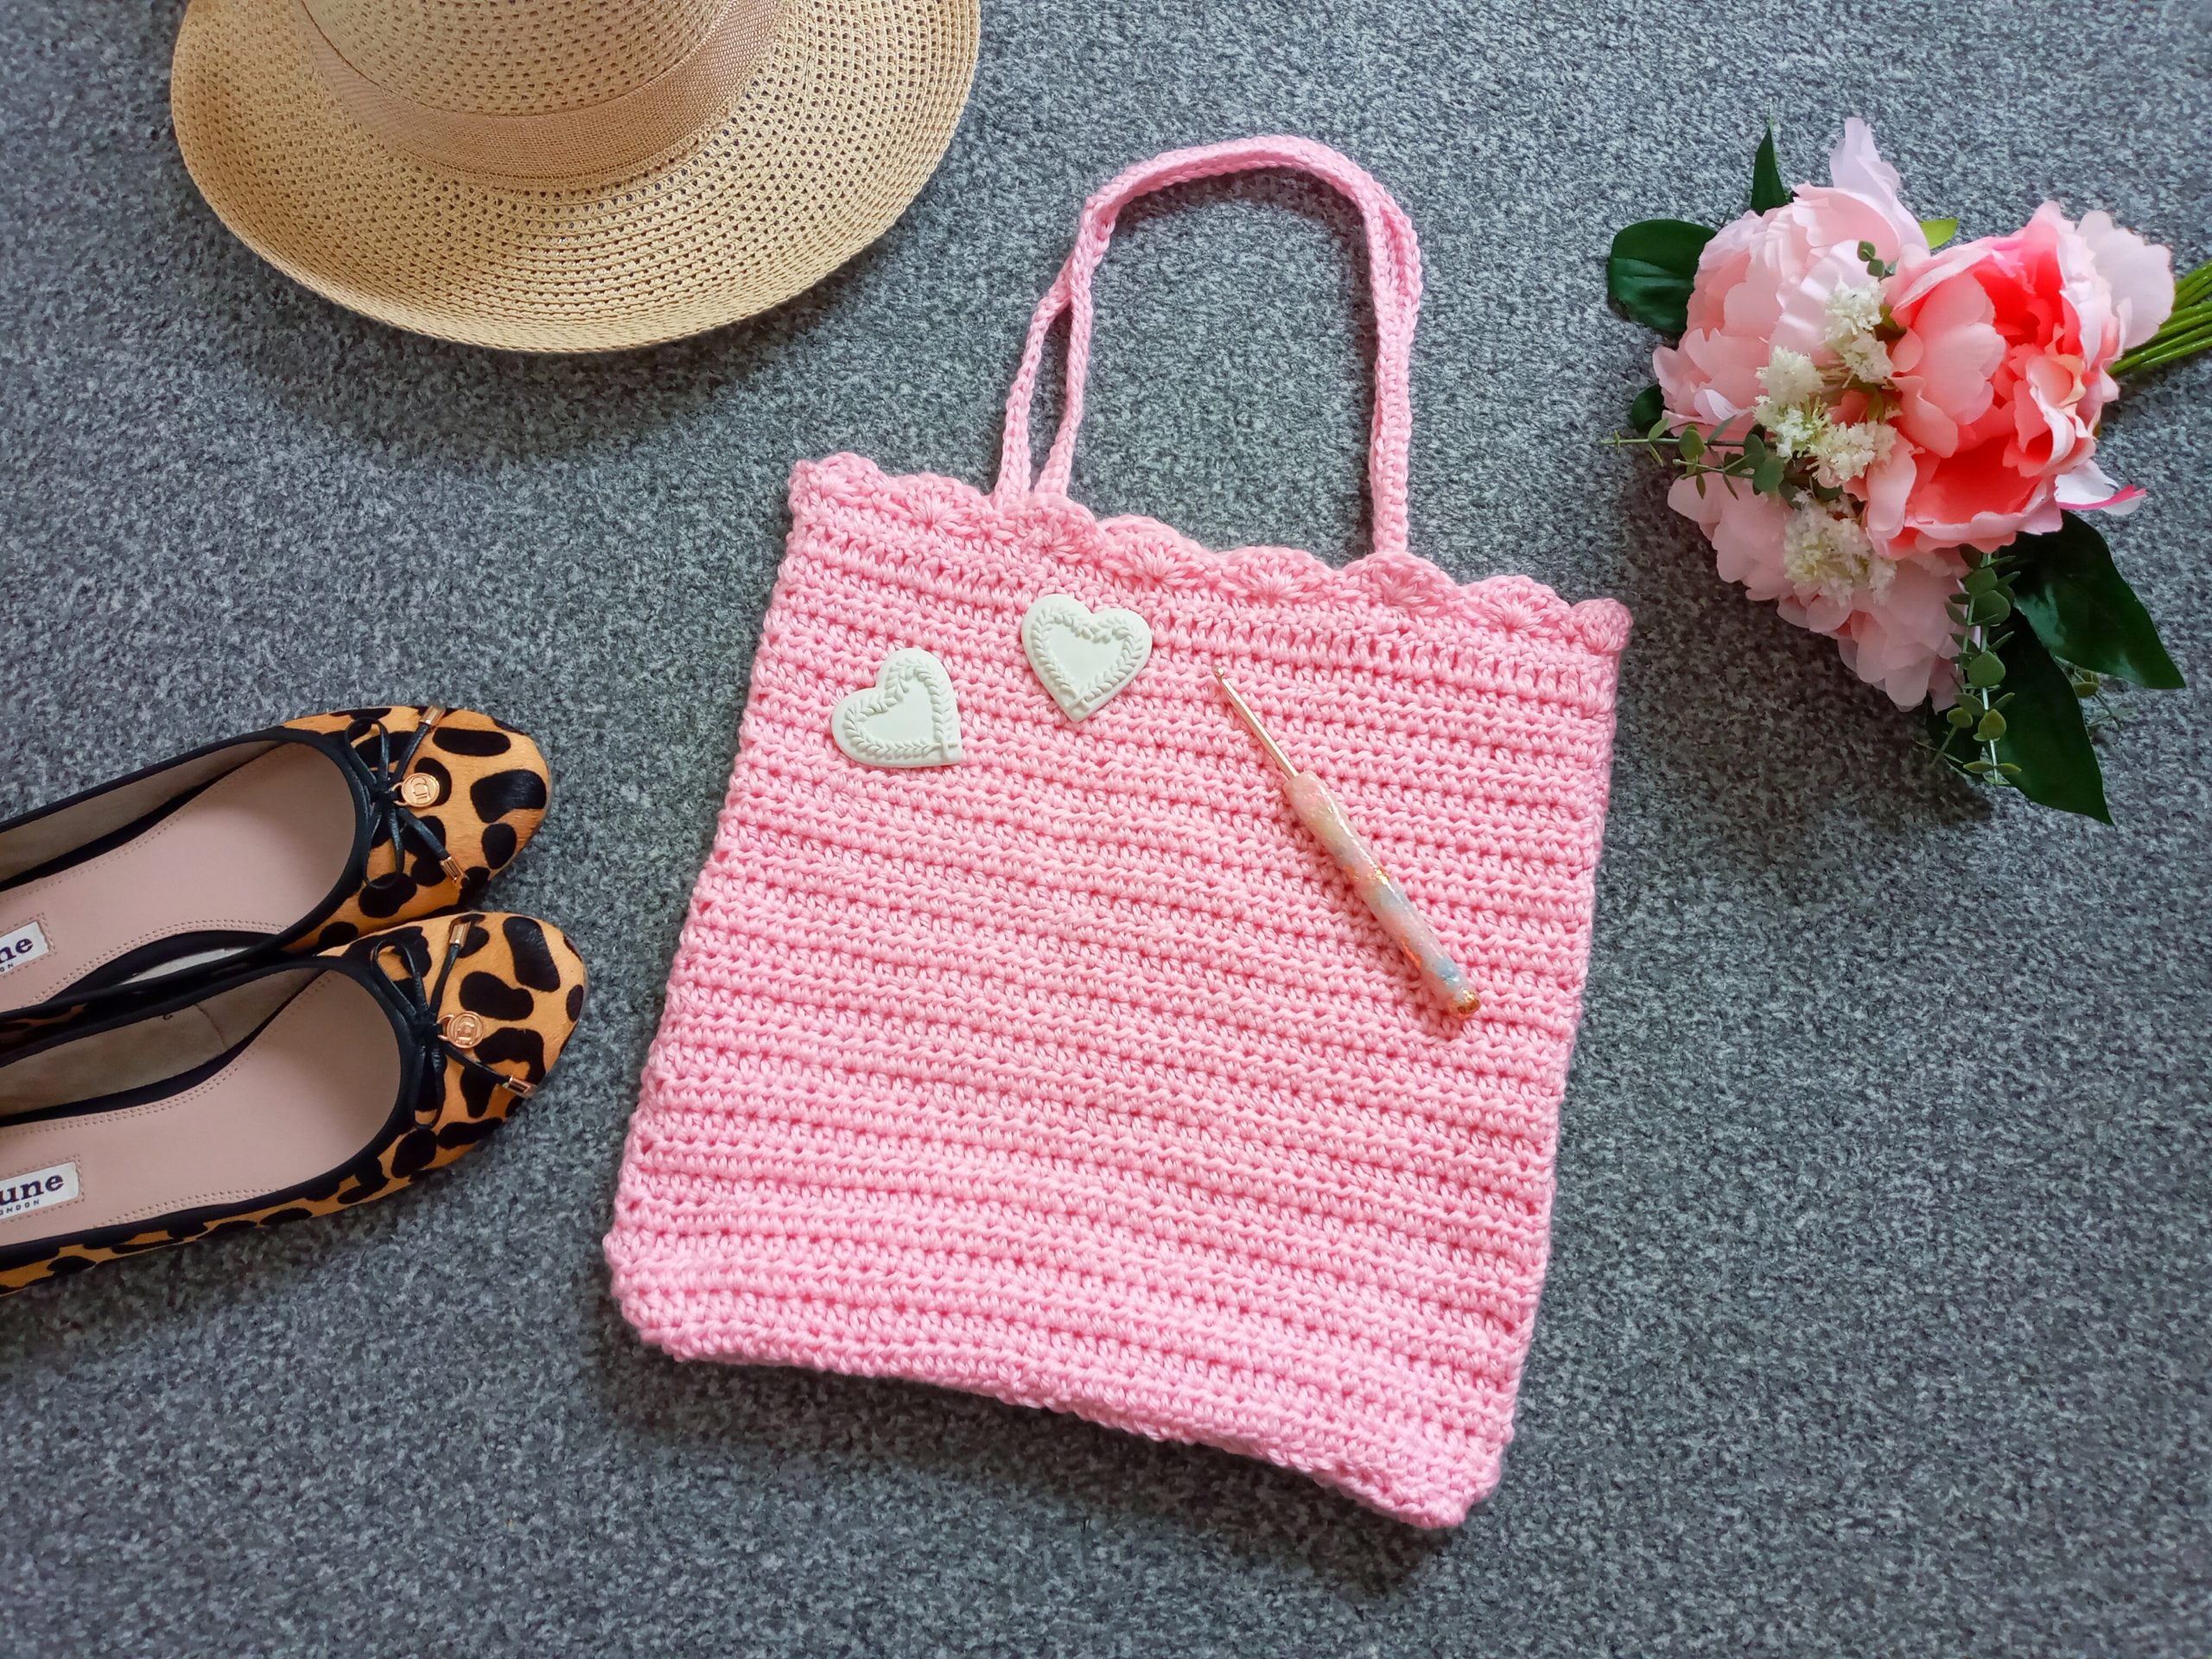 15 Free Crochet Drawstring Bag Patterns - Crochet Me